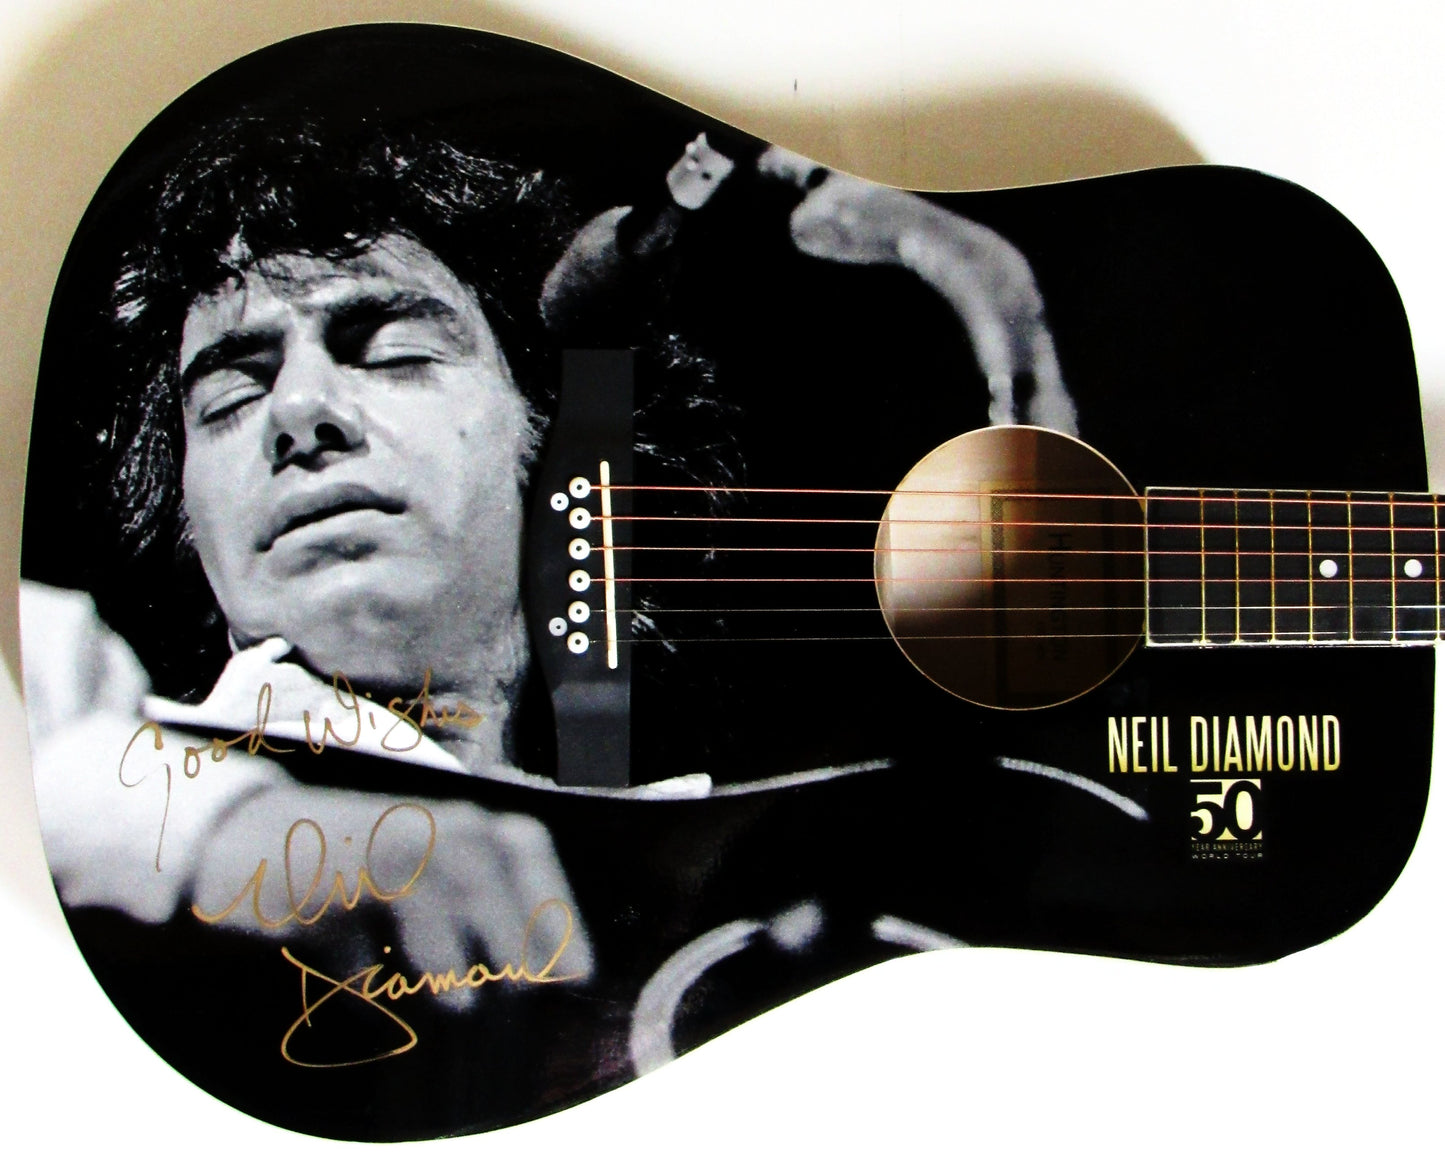 Neil Diamond Autographed Guitar - Zion Graphic Collectibles